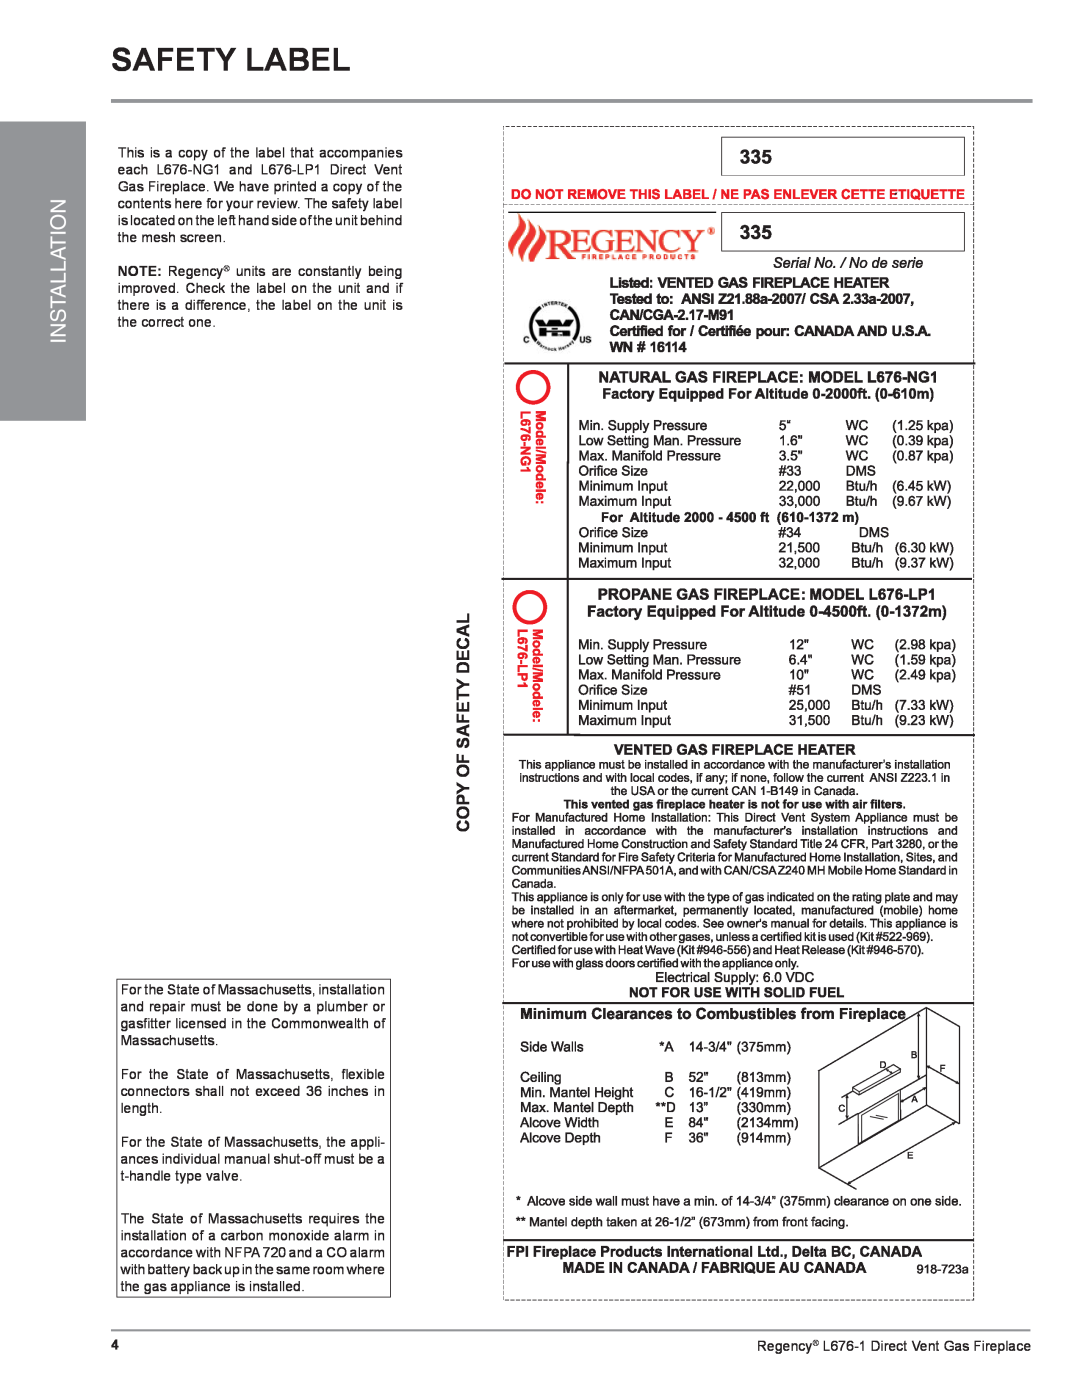 Regency L676-1, L676-NG1, L676-LP1 installation manual Safety Label, Installation 